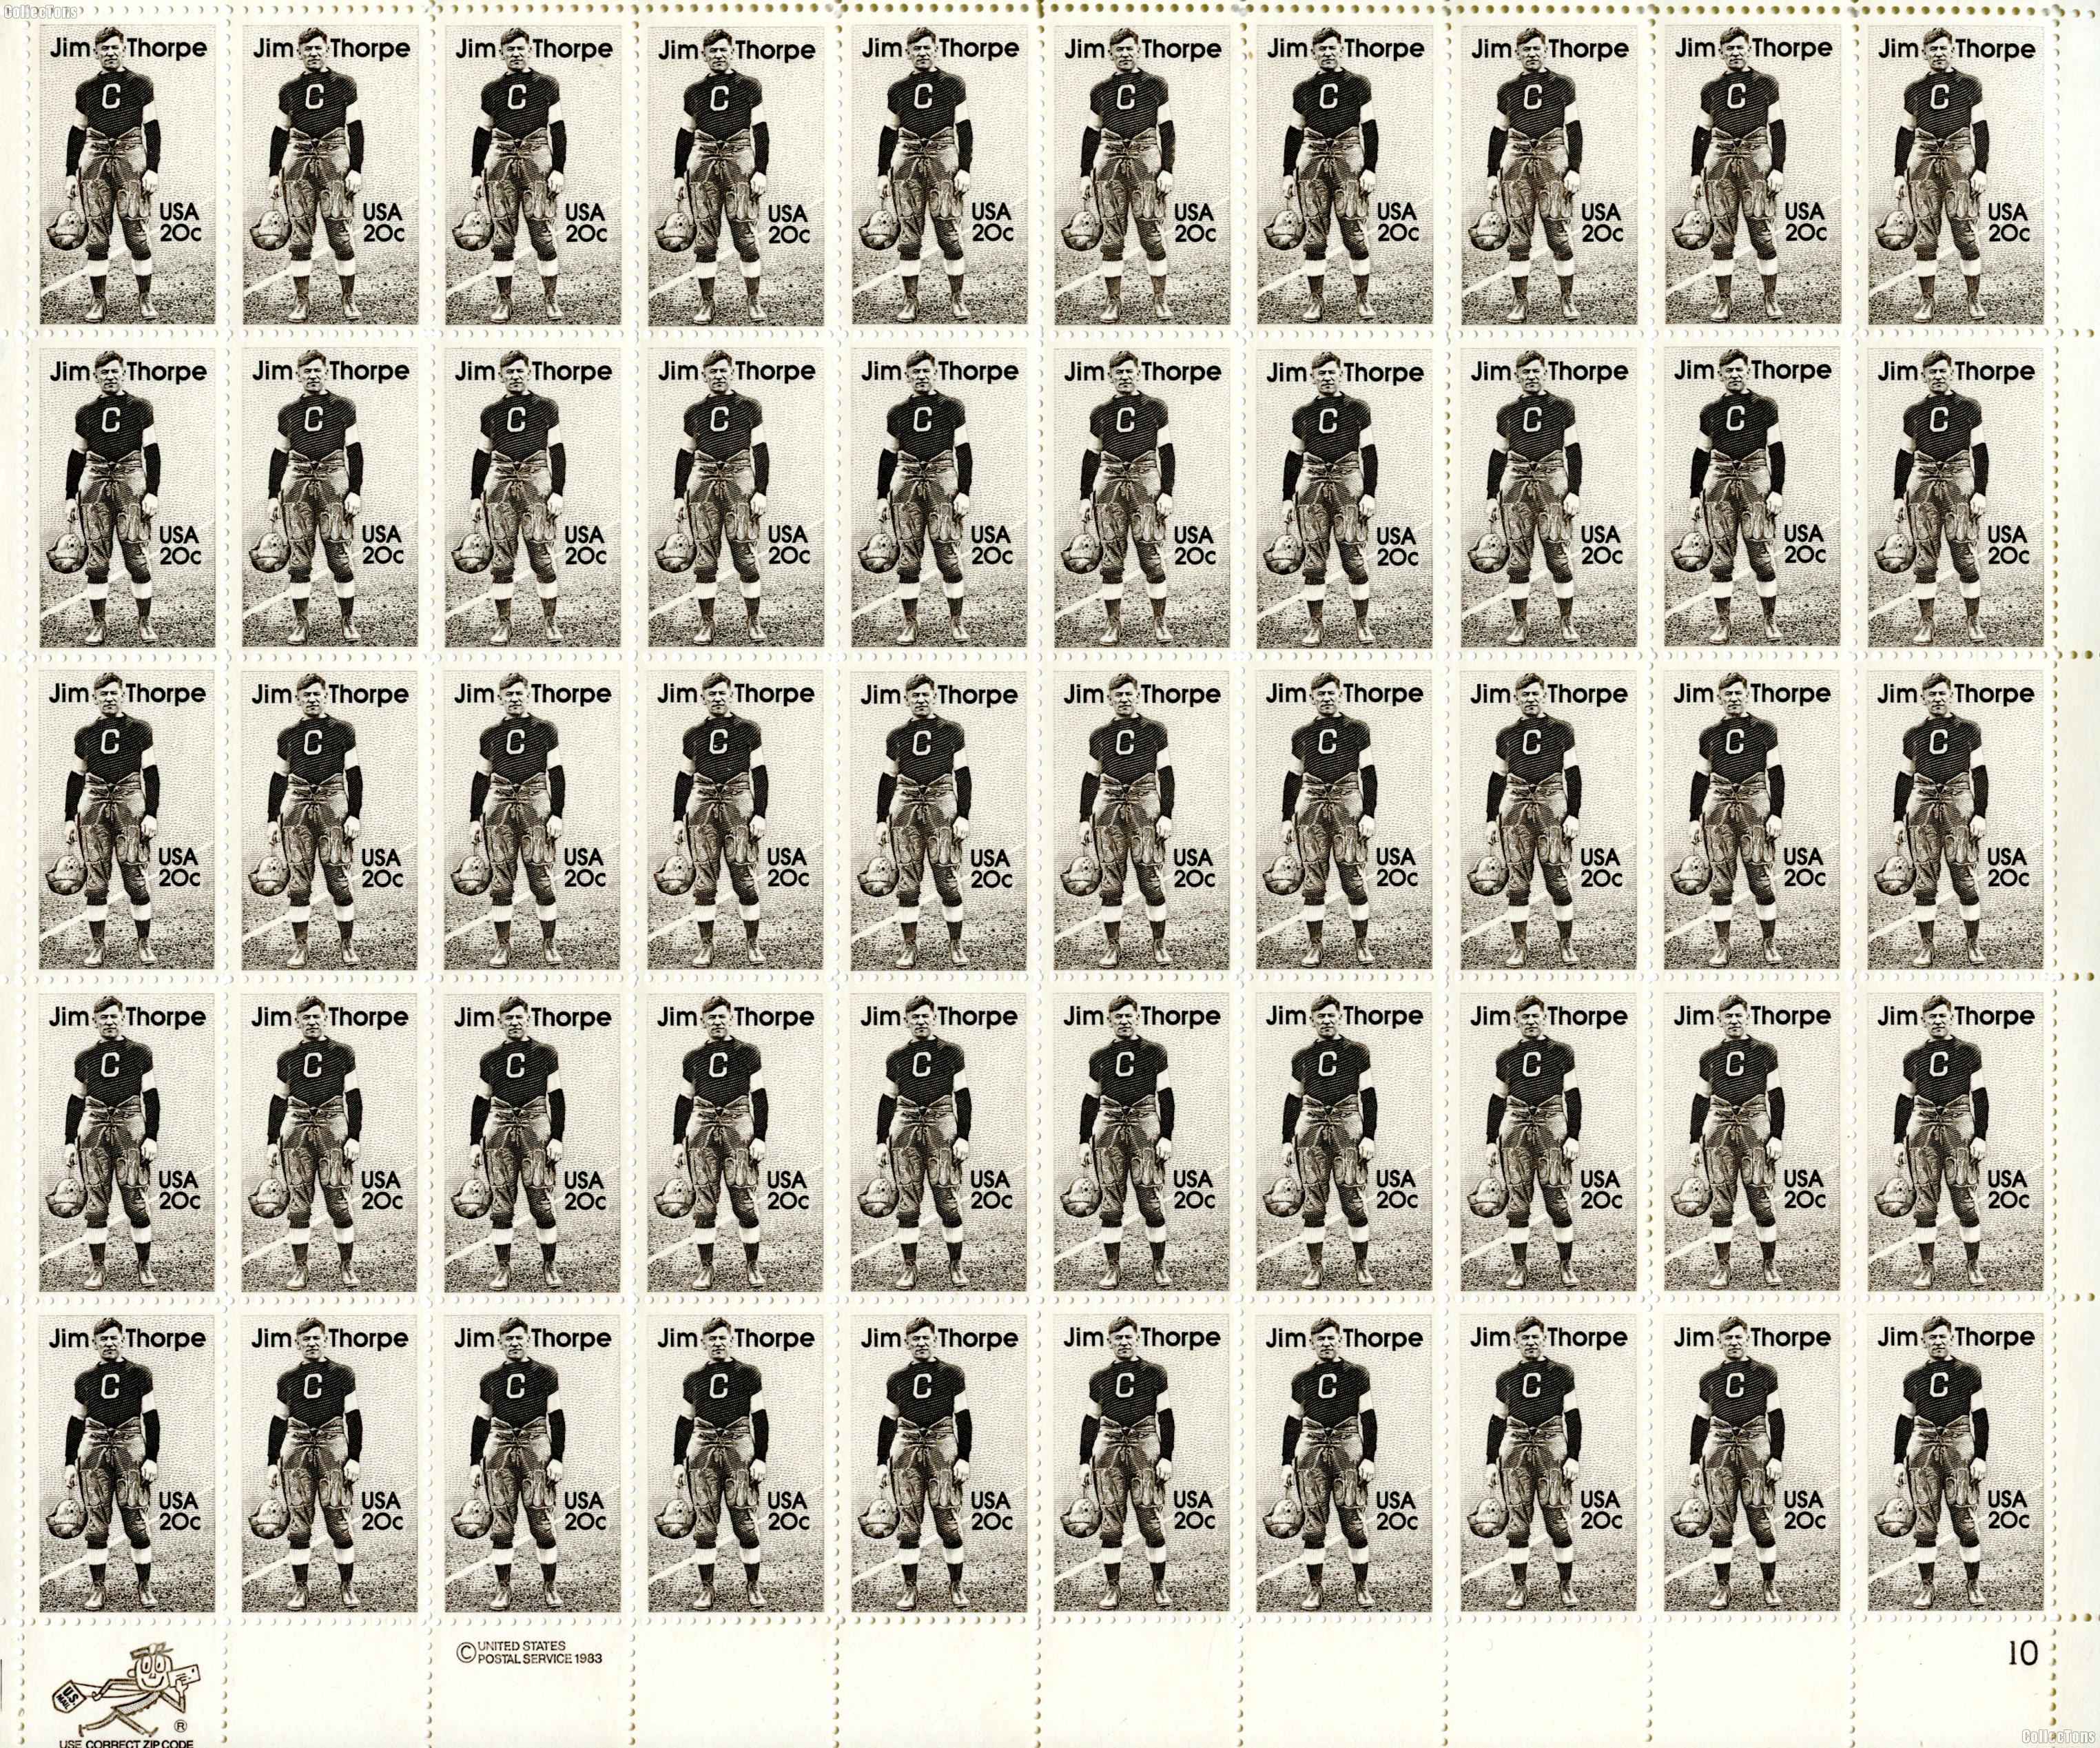 1984 Jim Thorpe 20 Cent US Postage Stamp MNH Sheet of 50 Scott #2089